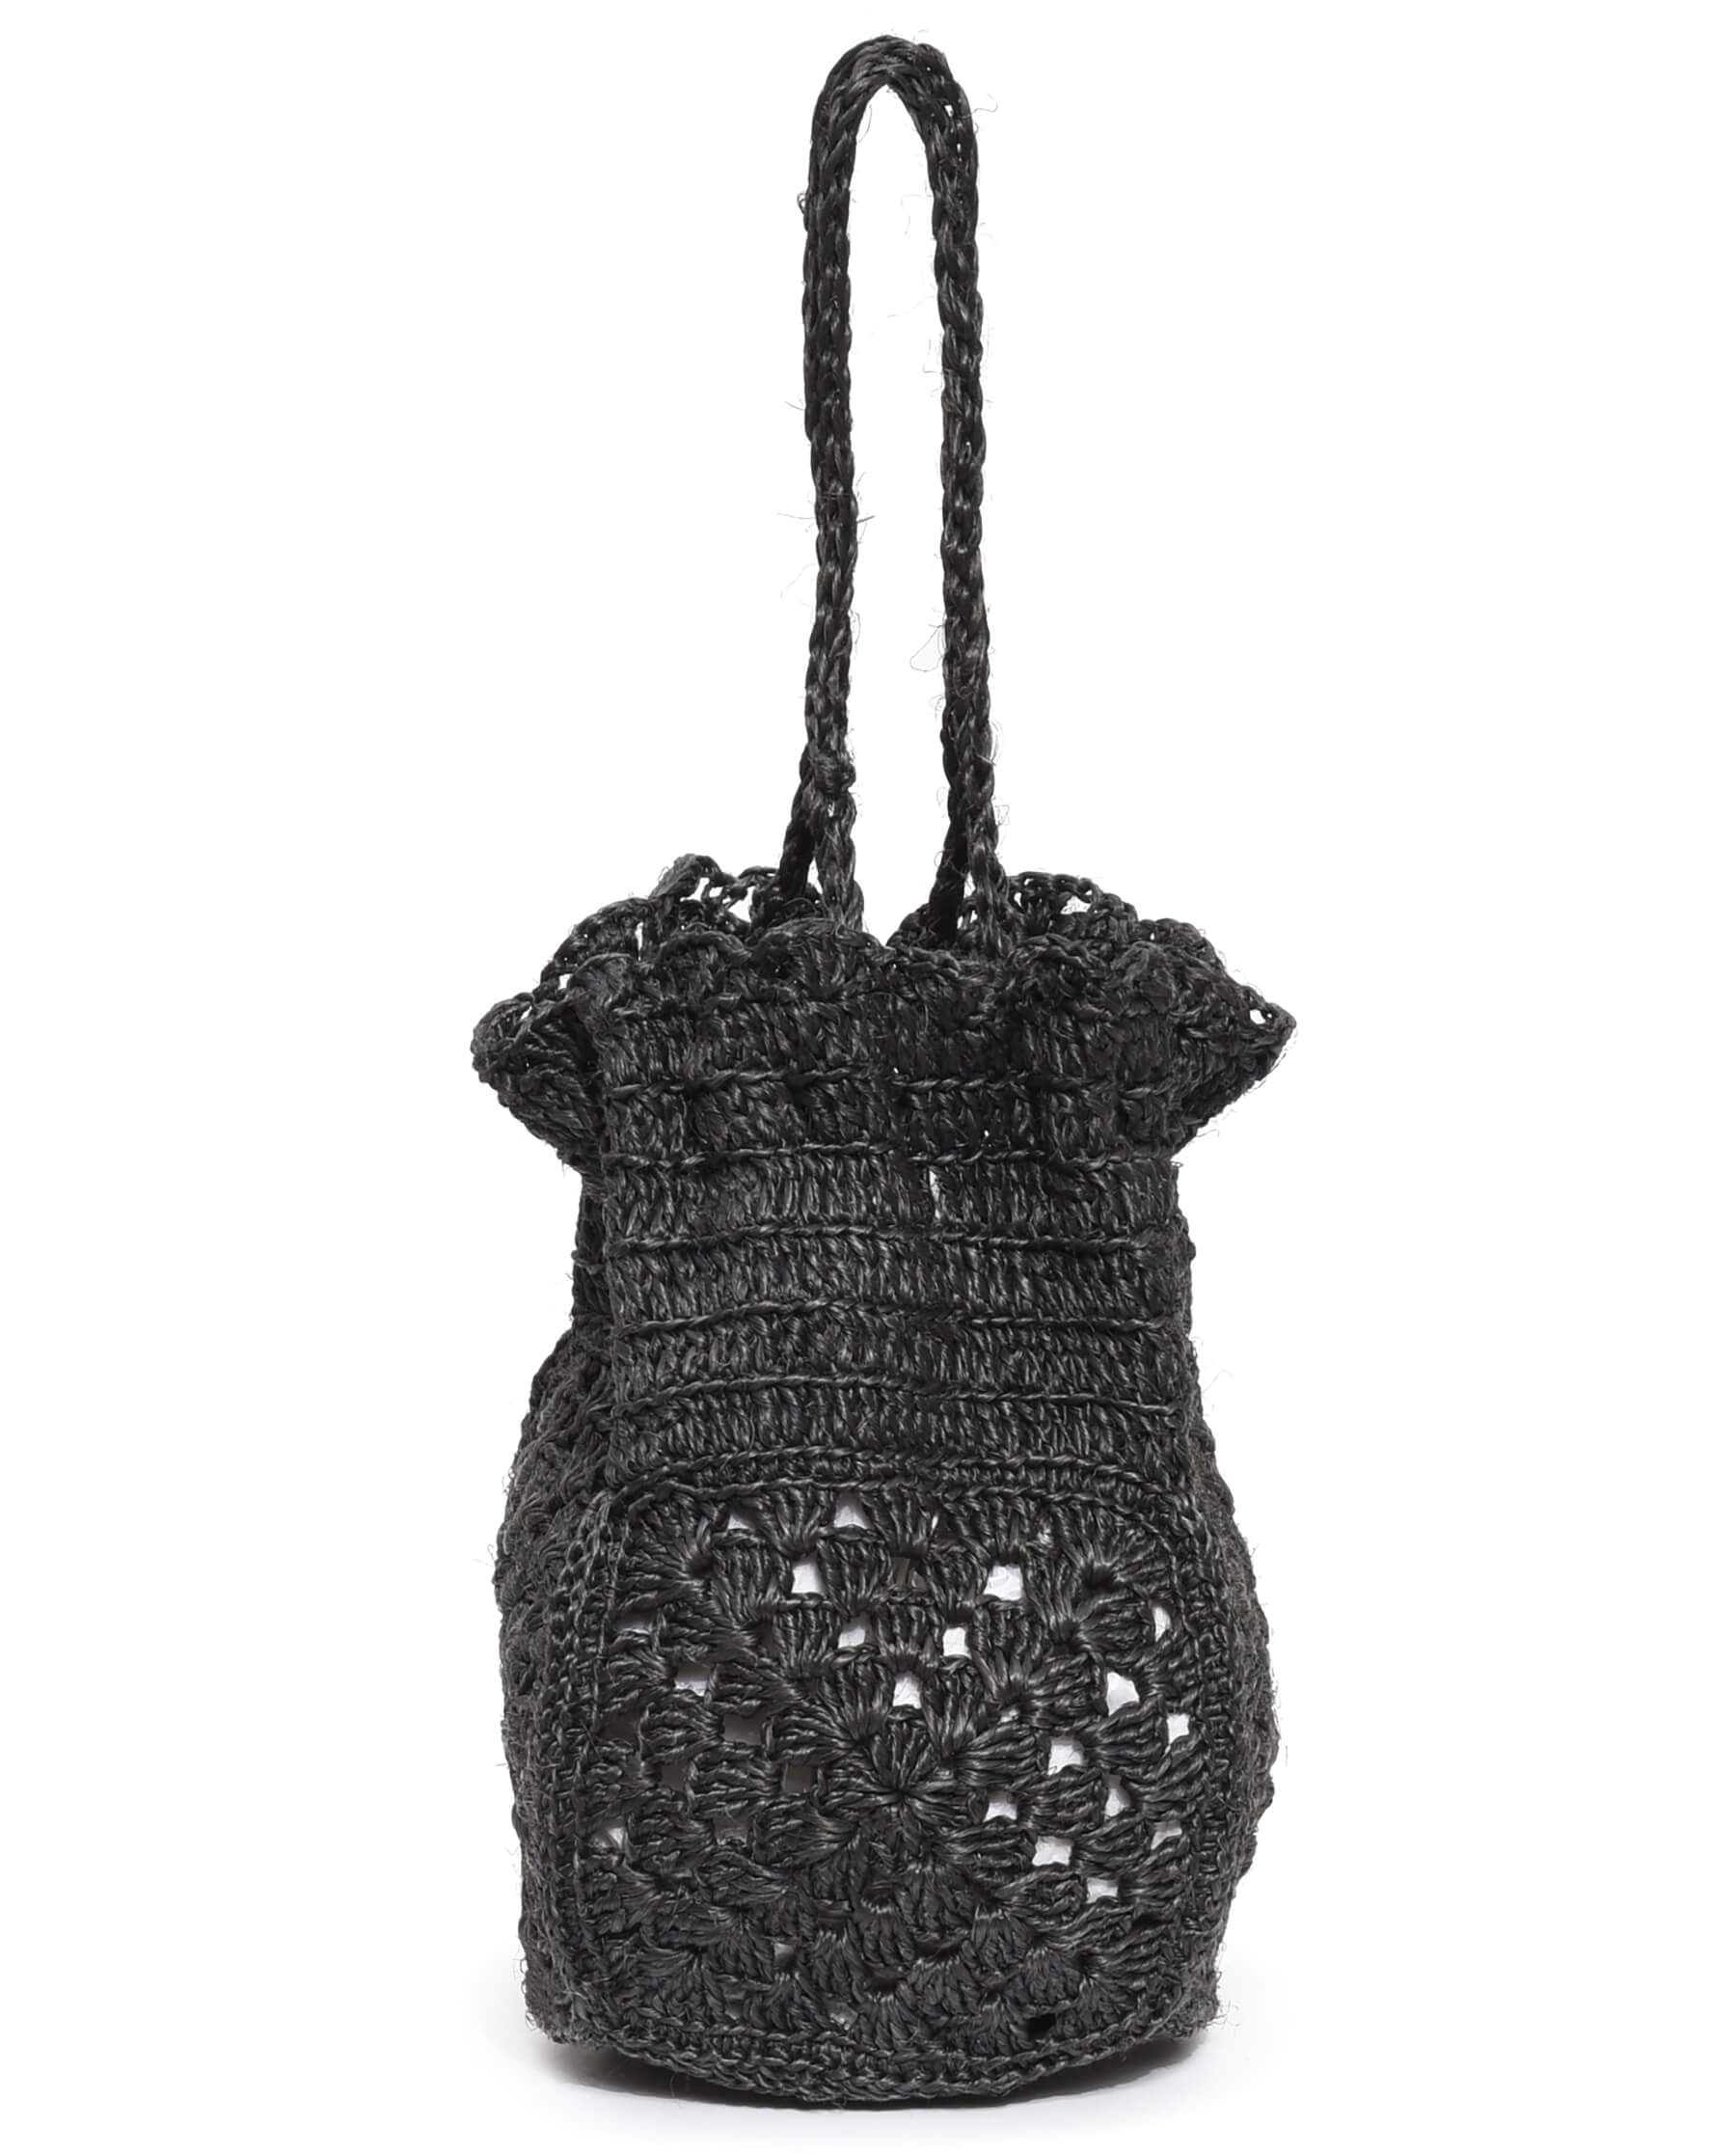 The Crochet Drawstring Bag. -- Black ACCESSORIES THE GREAT. SU23